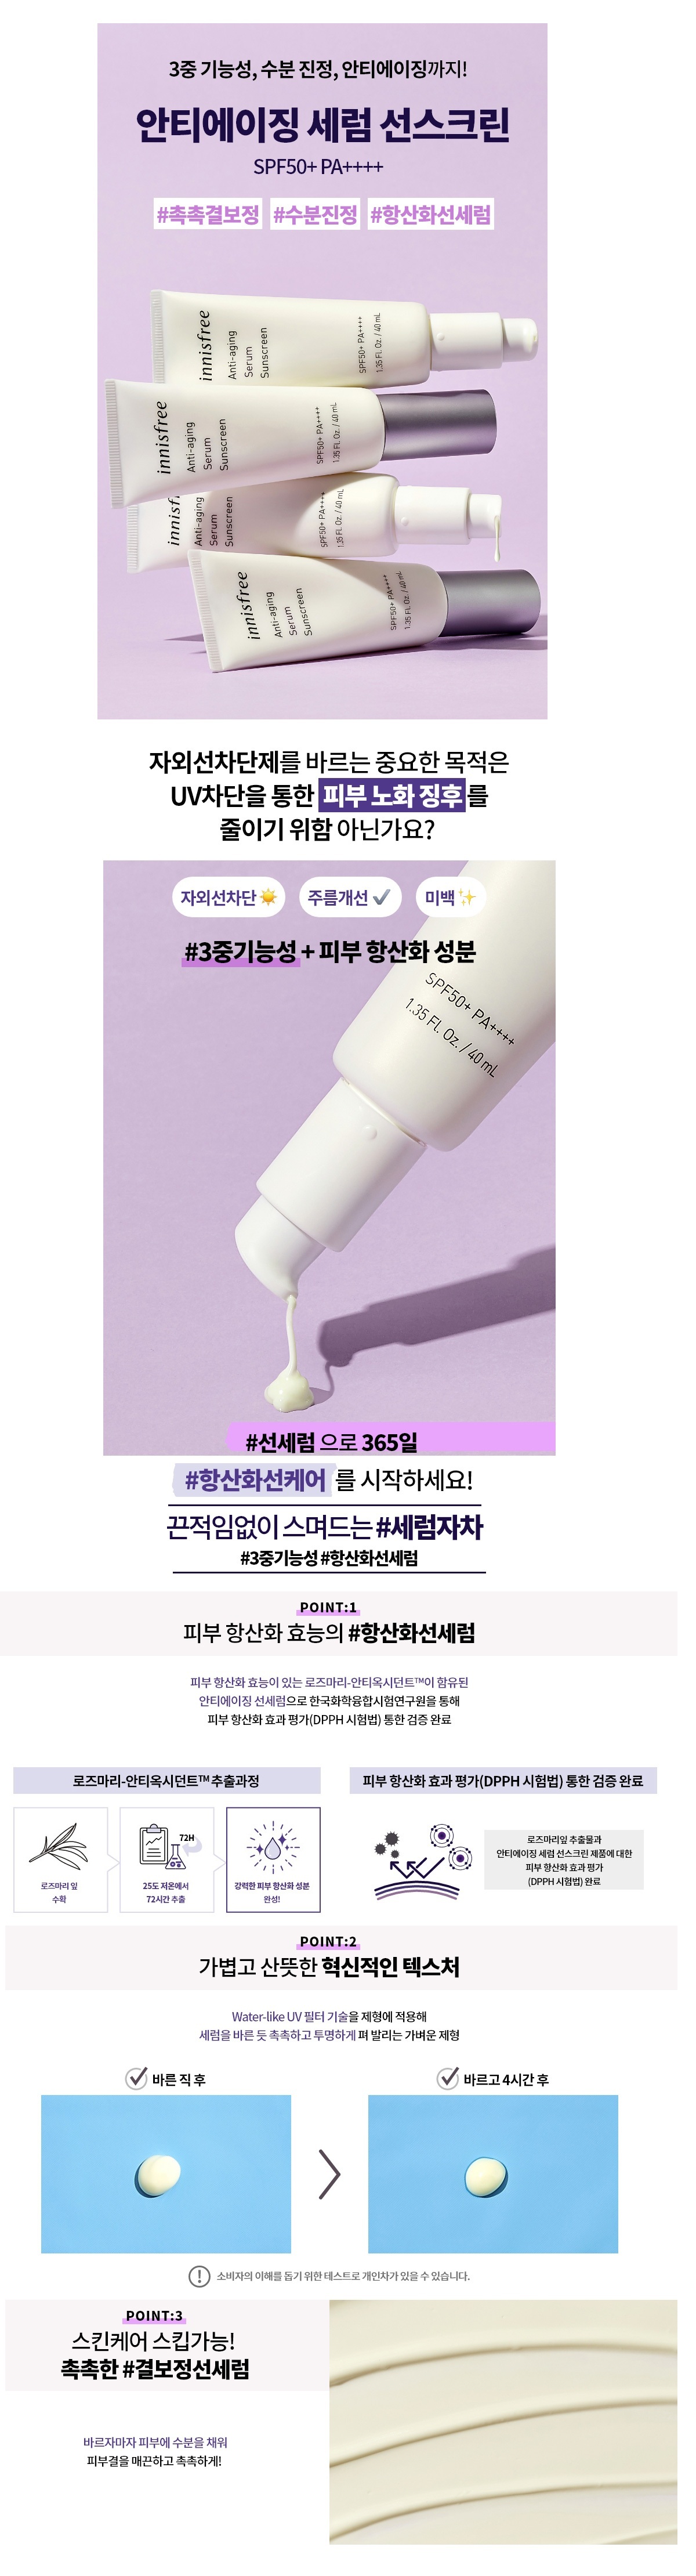 Innisfree Anti-Aging Serum Sunscreen korean skincare product online shop malaysia china macau11